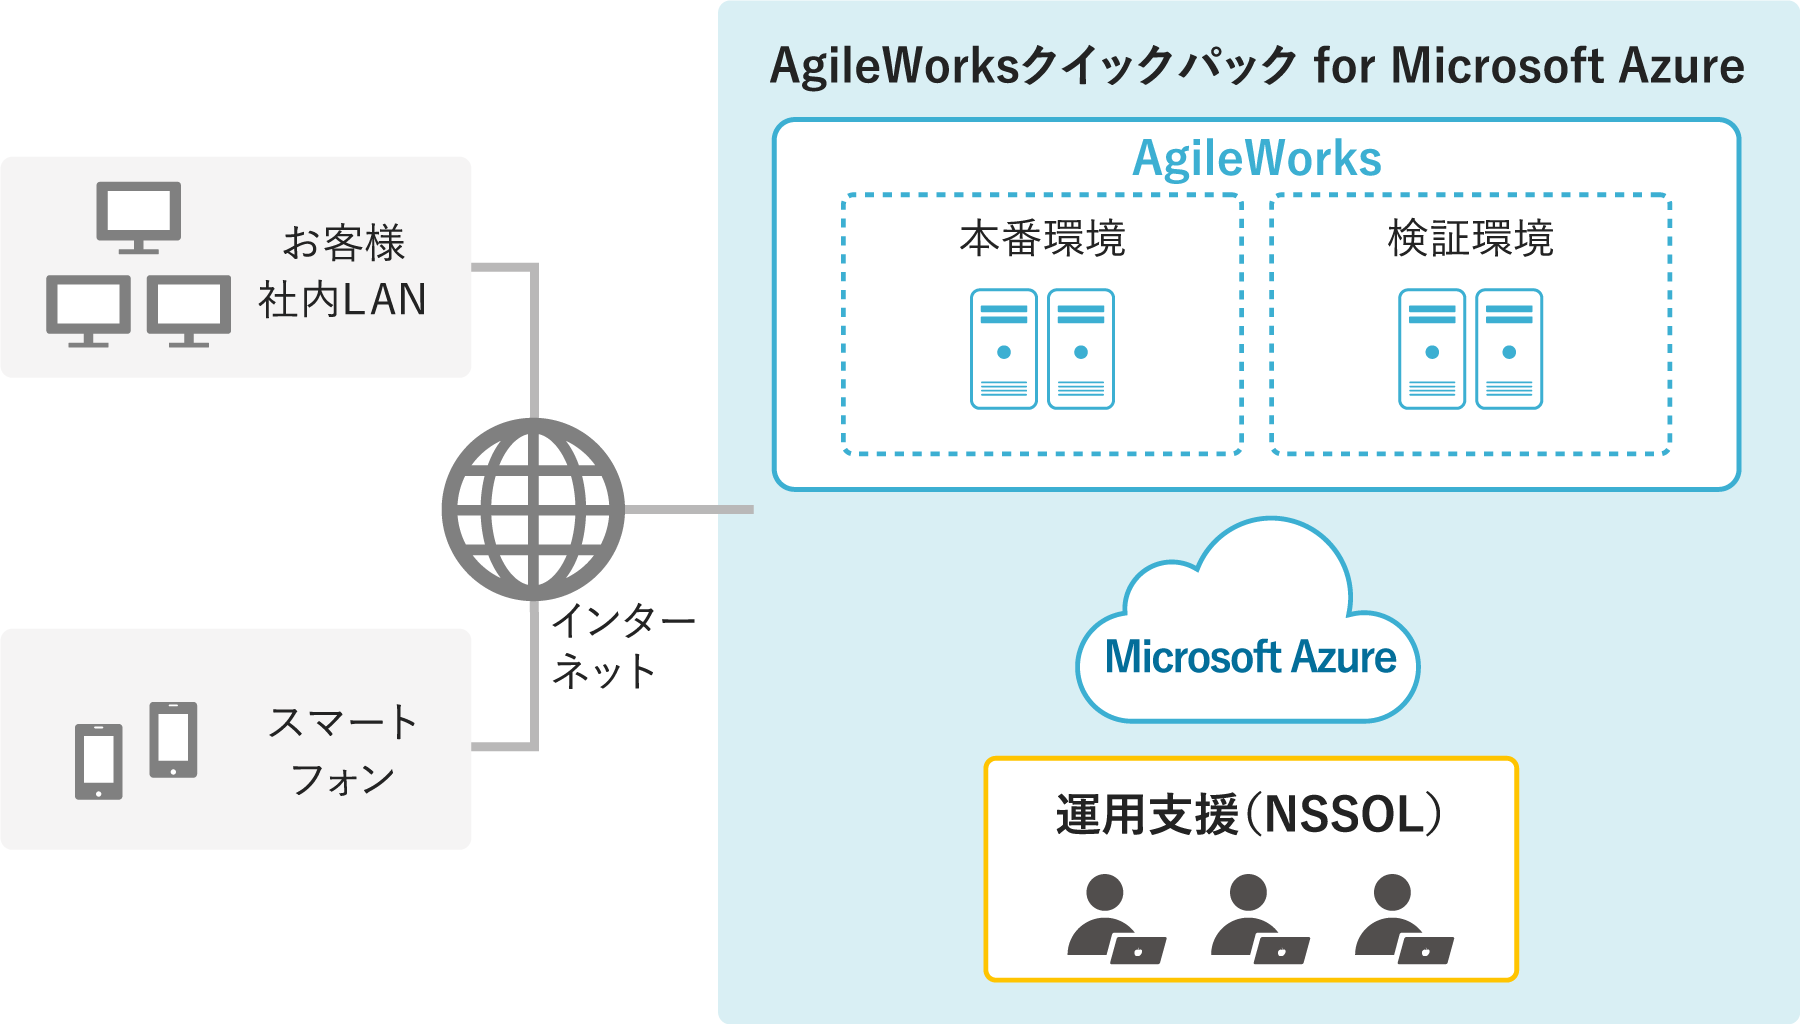 AgileWorksクイックパック for Microsoft Azureのシステム概要